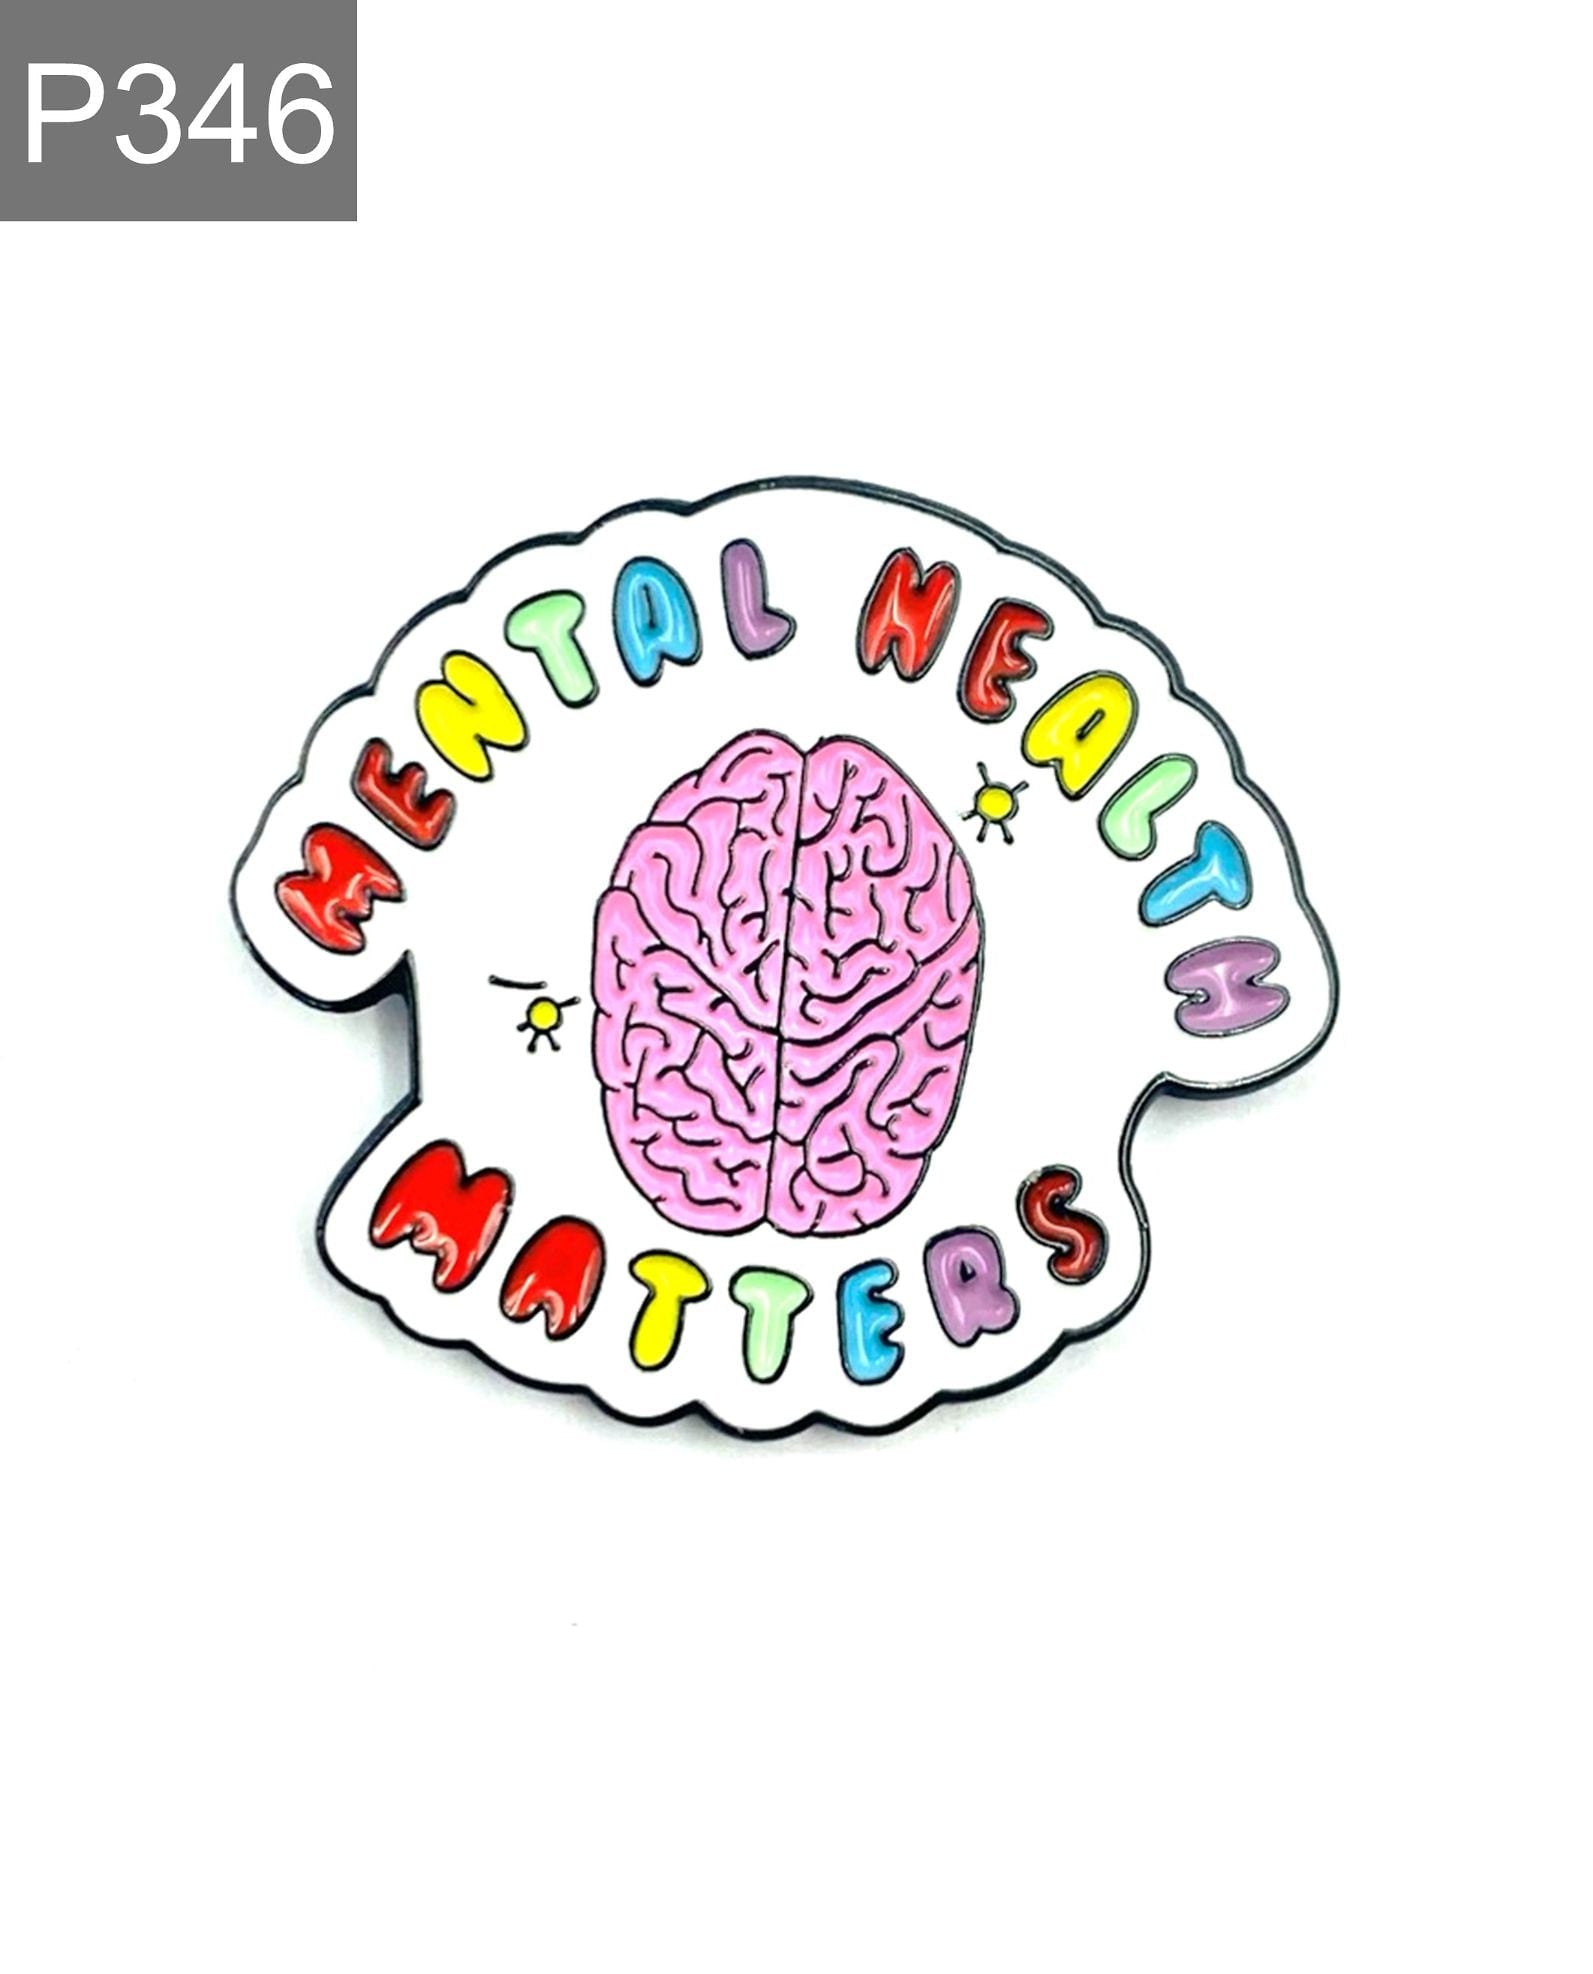 Saying "mental health matters" Enamel Pin